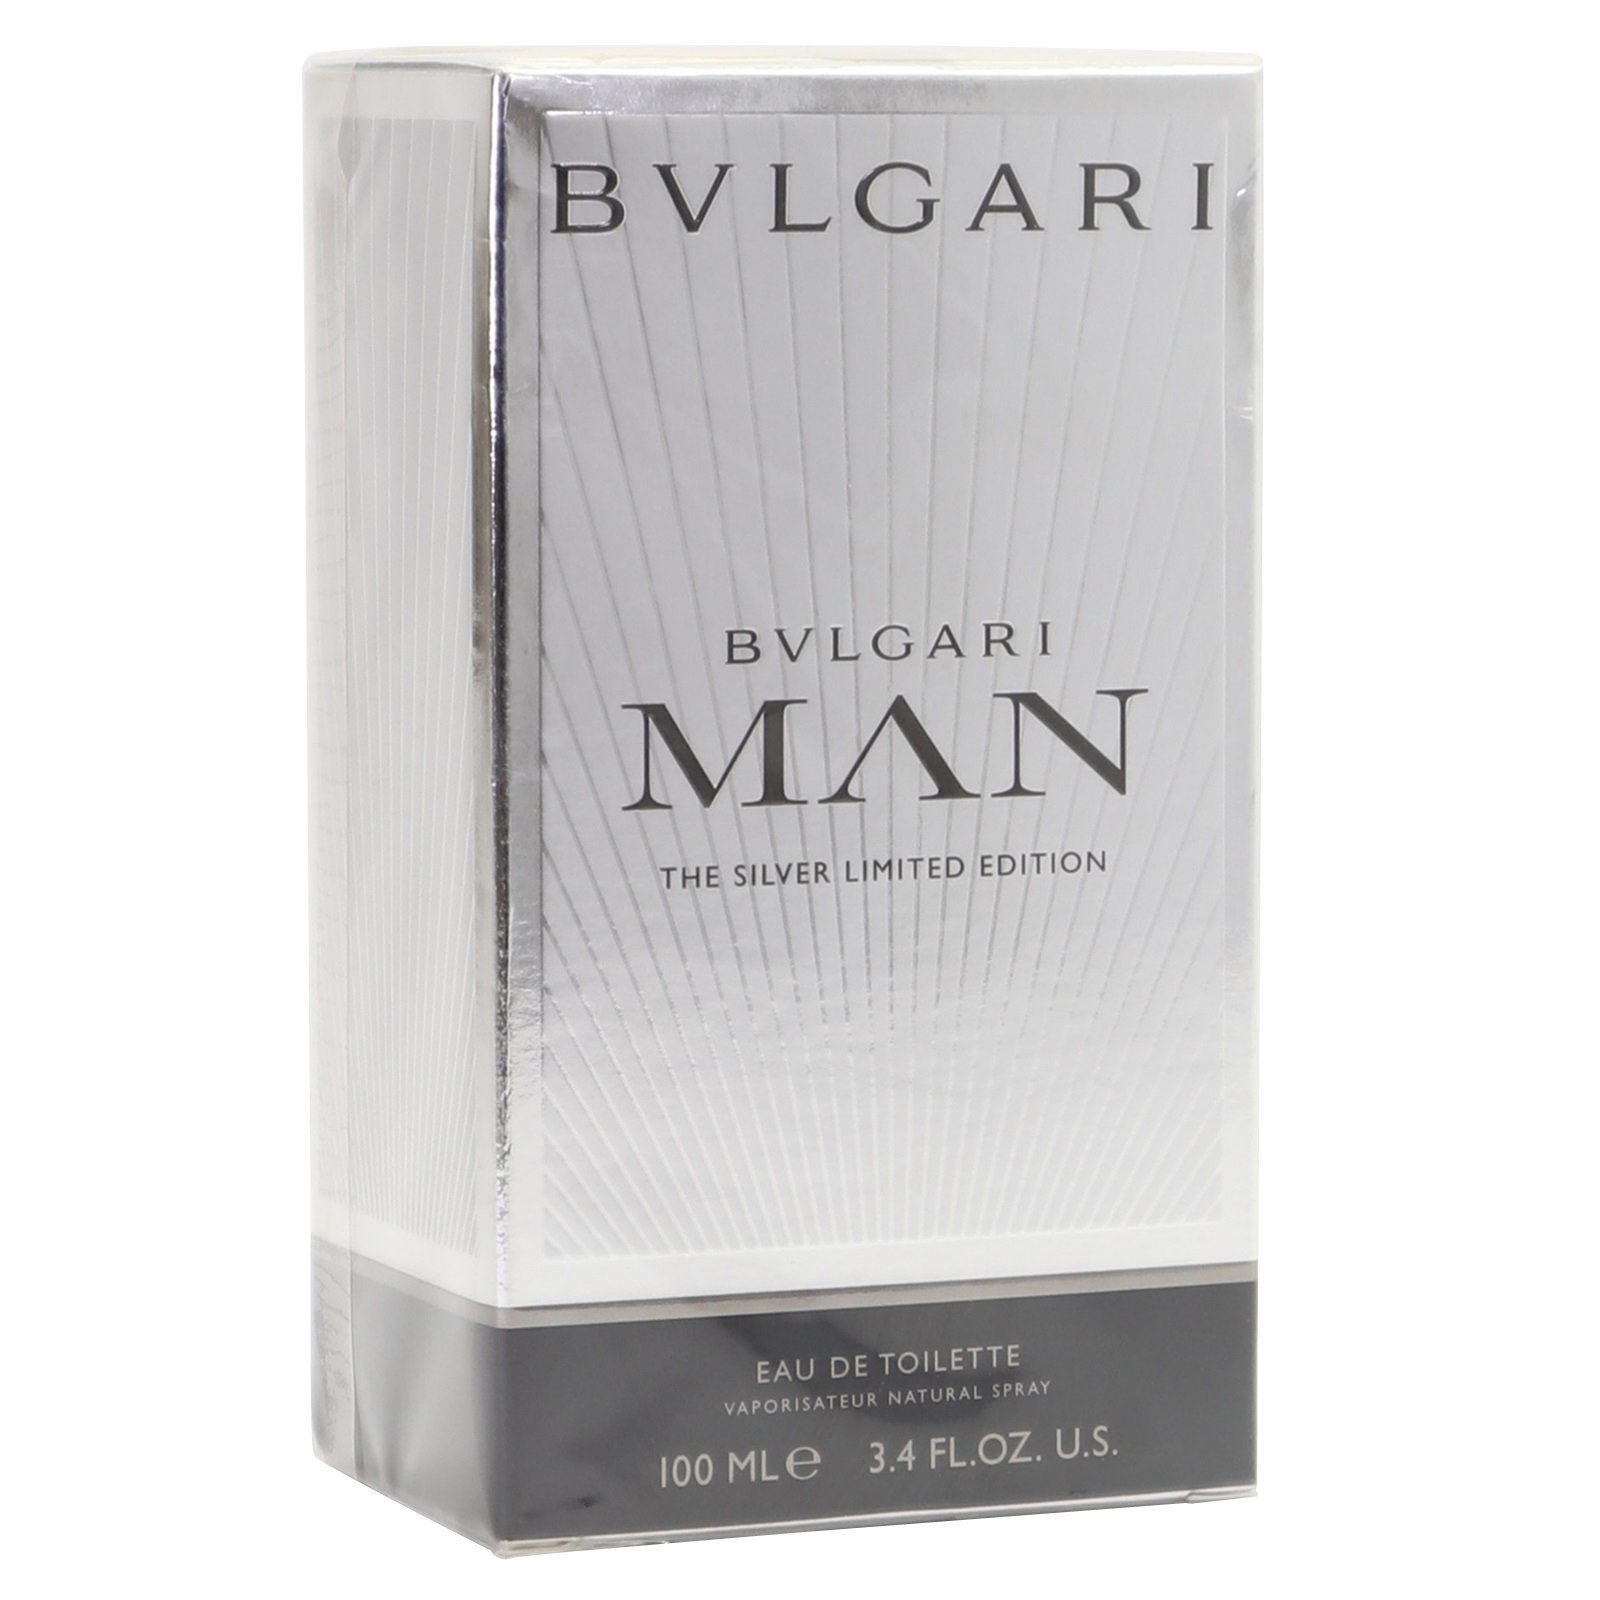 BVLGARI Eau de Toilette Bvlgari Man the Silver Limited Edition Eau de Toilette Spray 100 ml